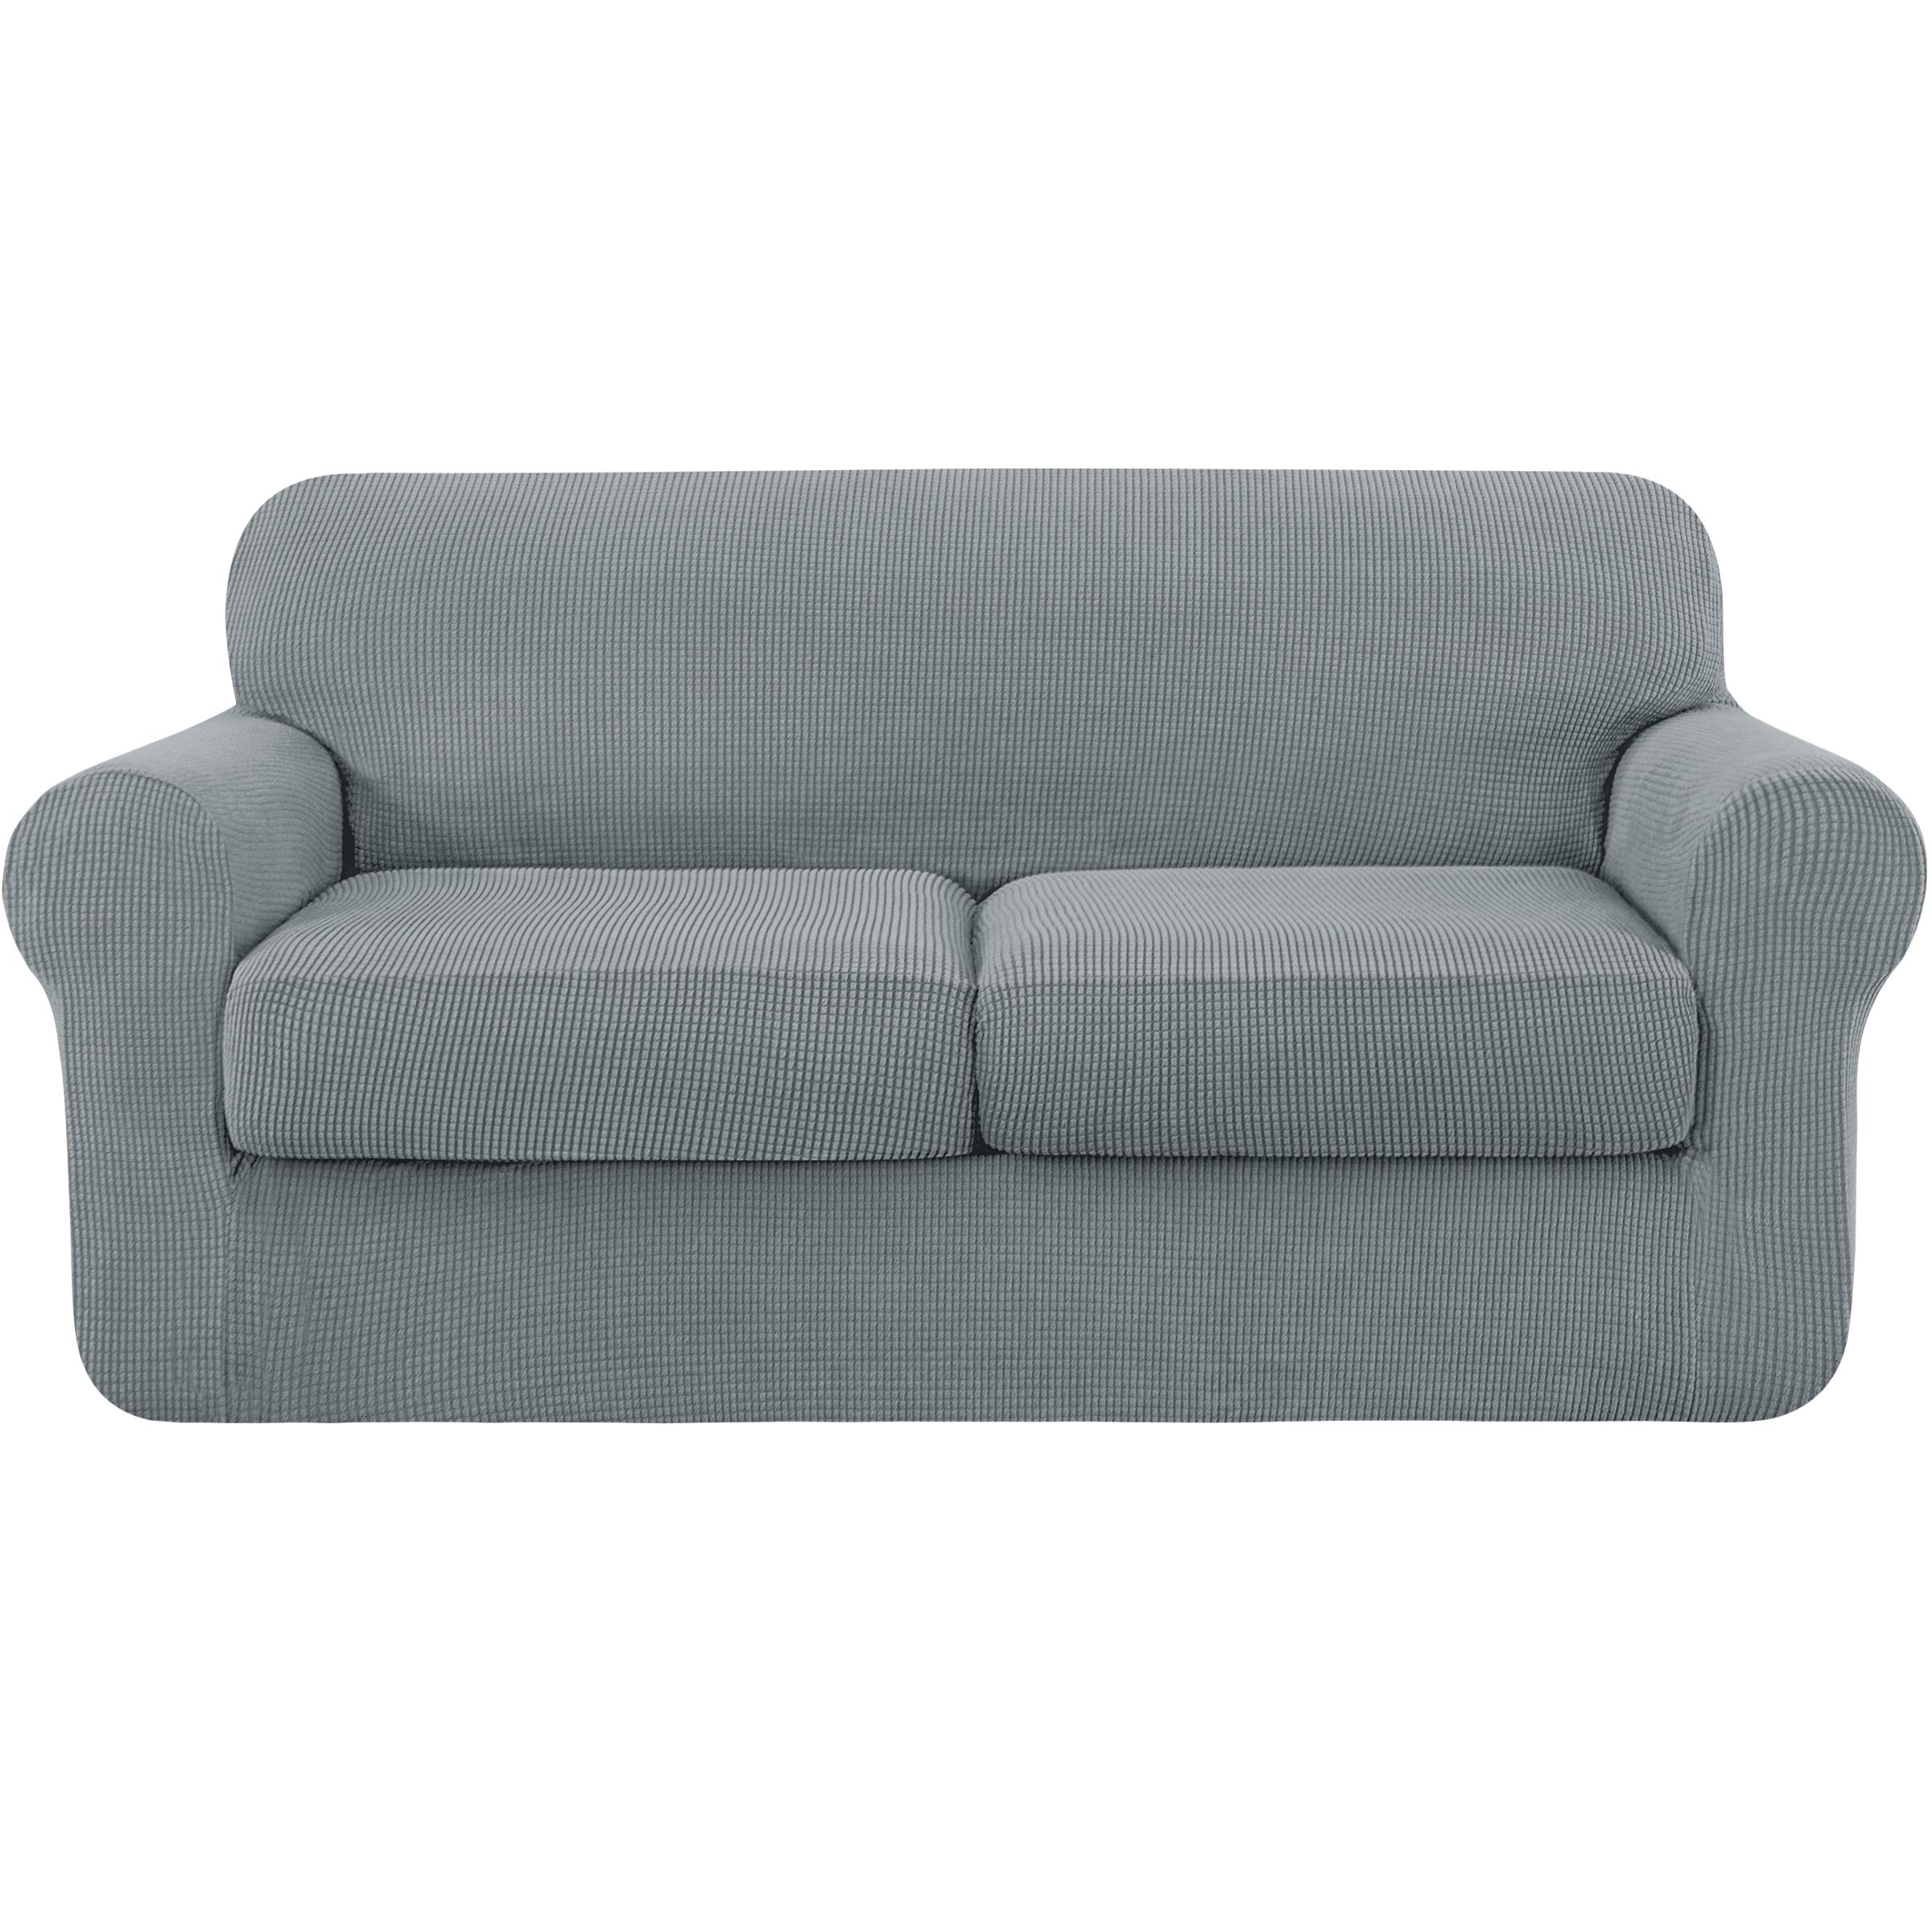 SUBRTEX 3 Piece Sofa cover High Stretch couch Slipcover for 2 cushion Soft Sofa Slipcover Loveseat cover Jacquard Fabric Furnitu